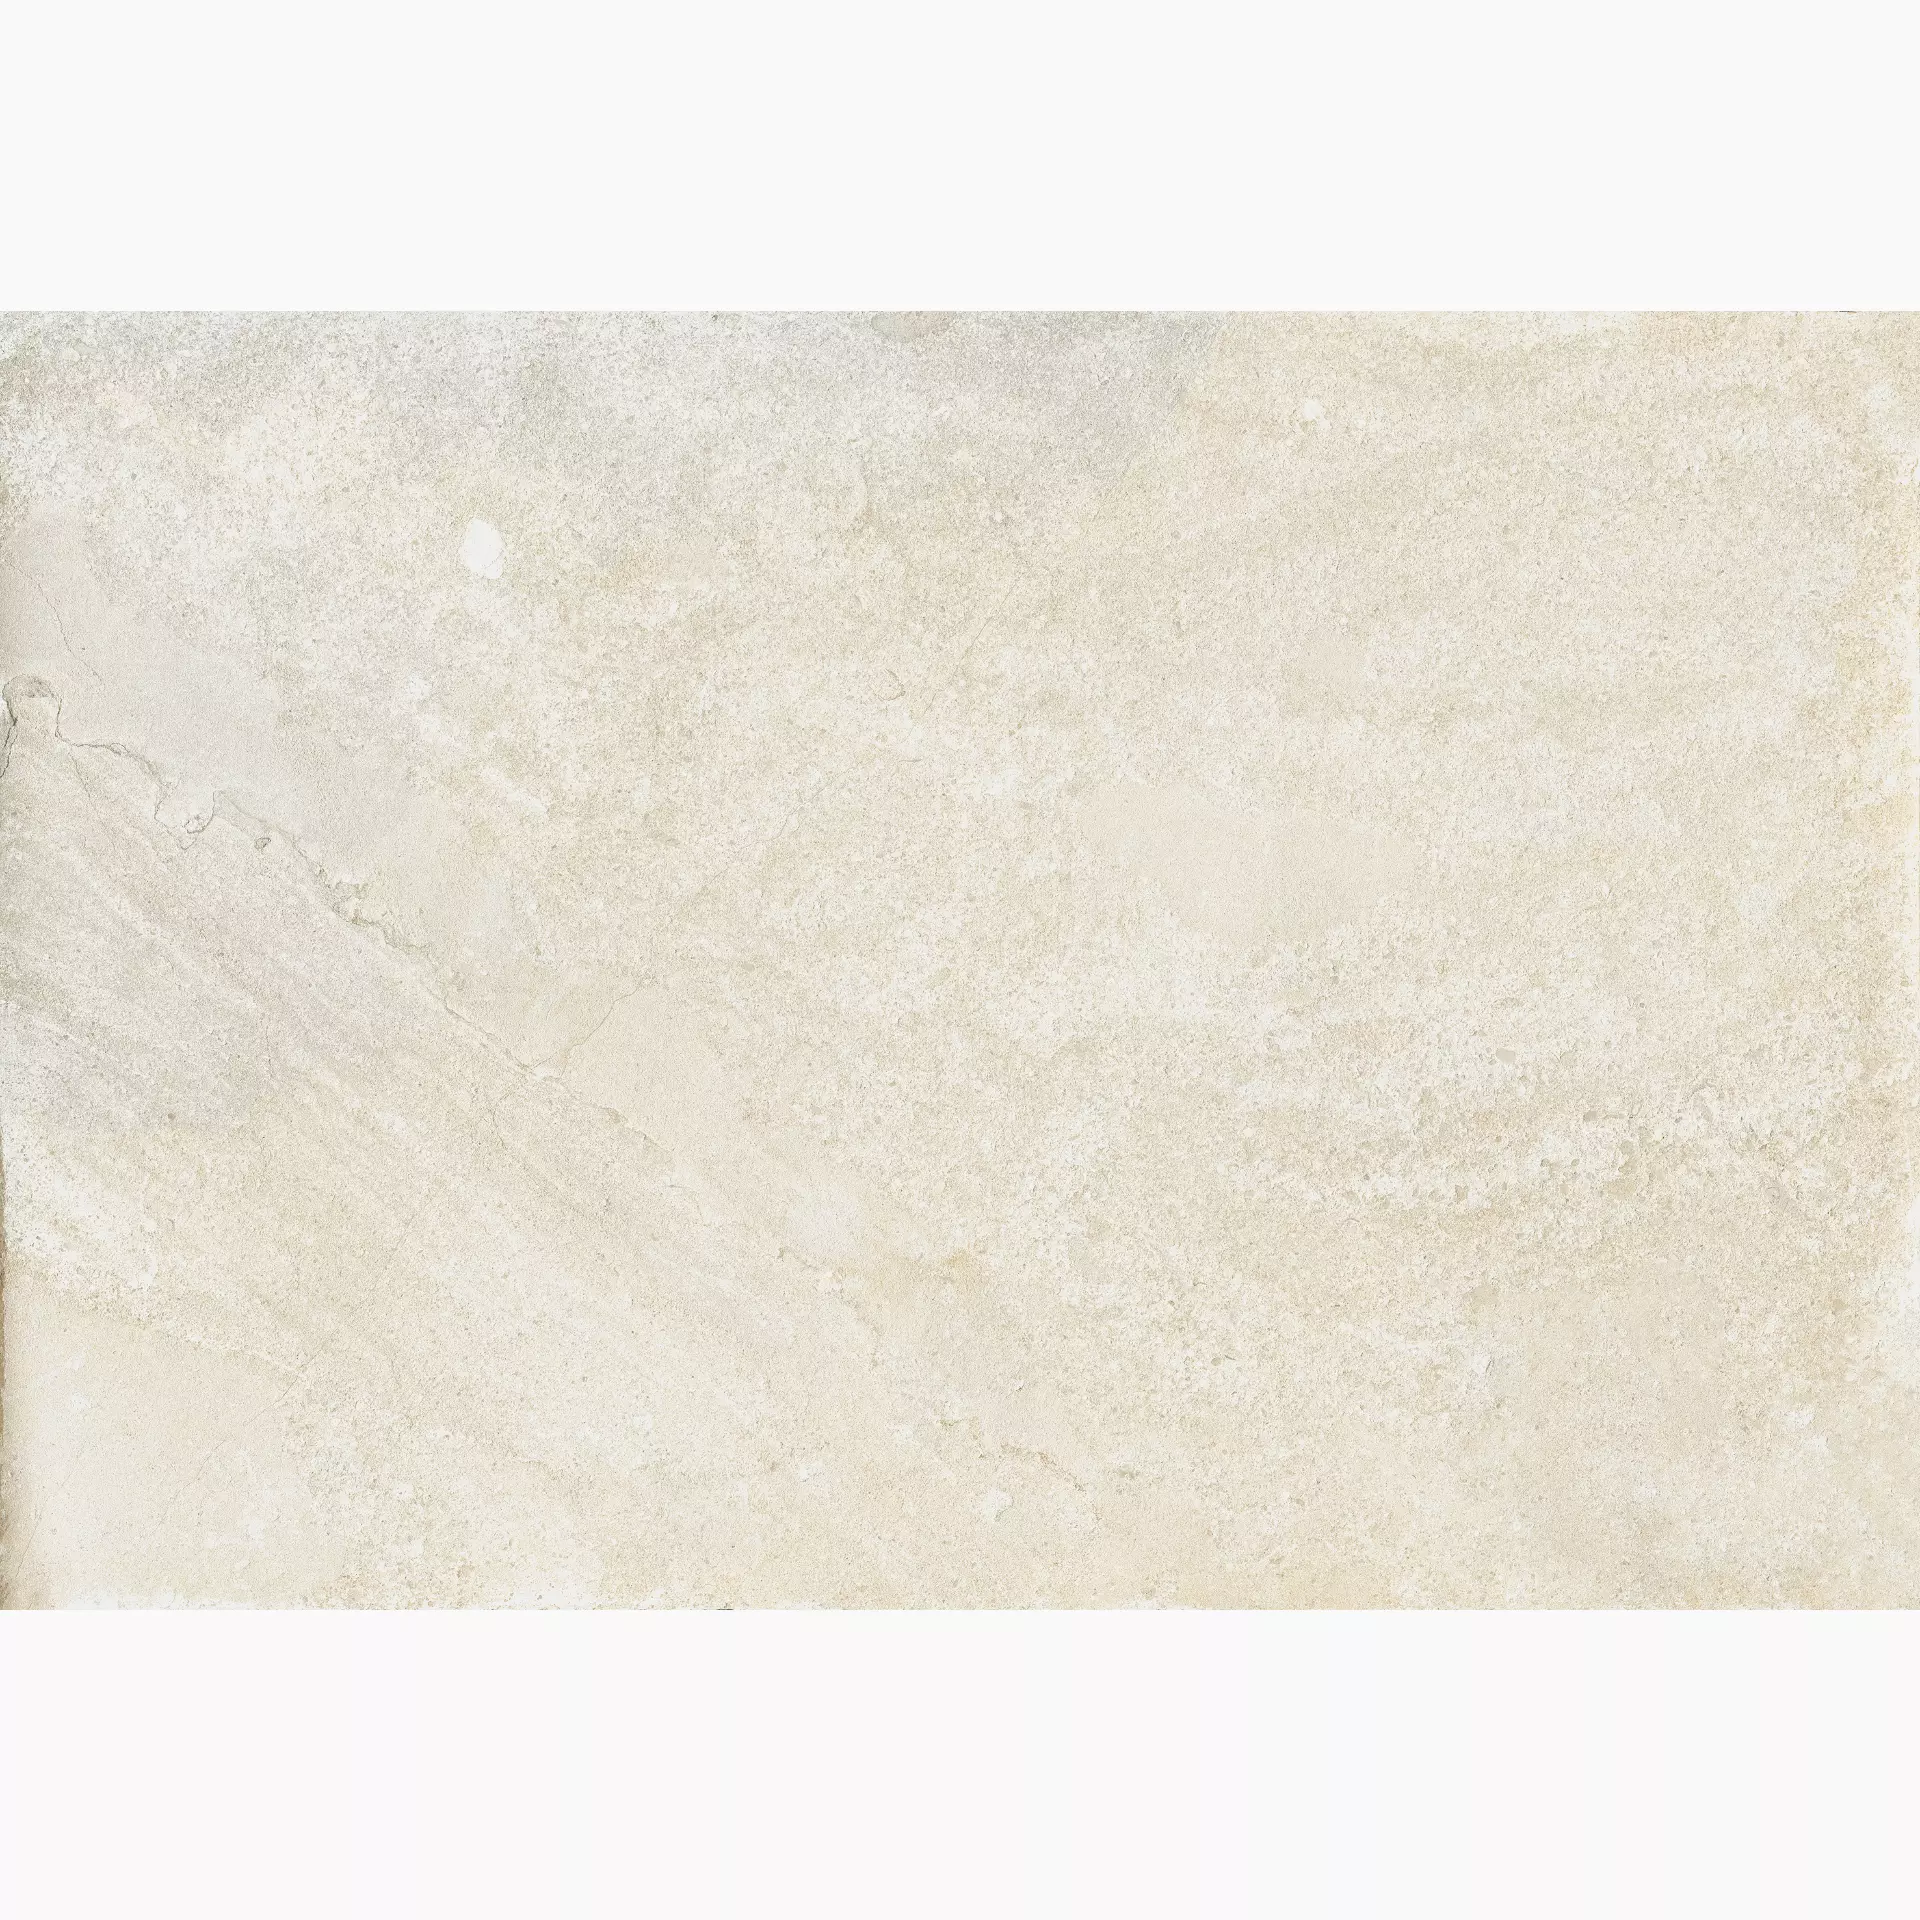 Coem Tuffeau Bianco Naturale 0VG691R 60,4x90,6cm 10mm